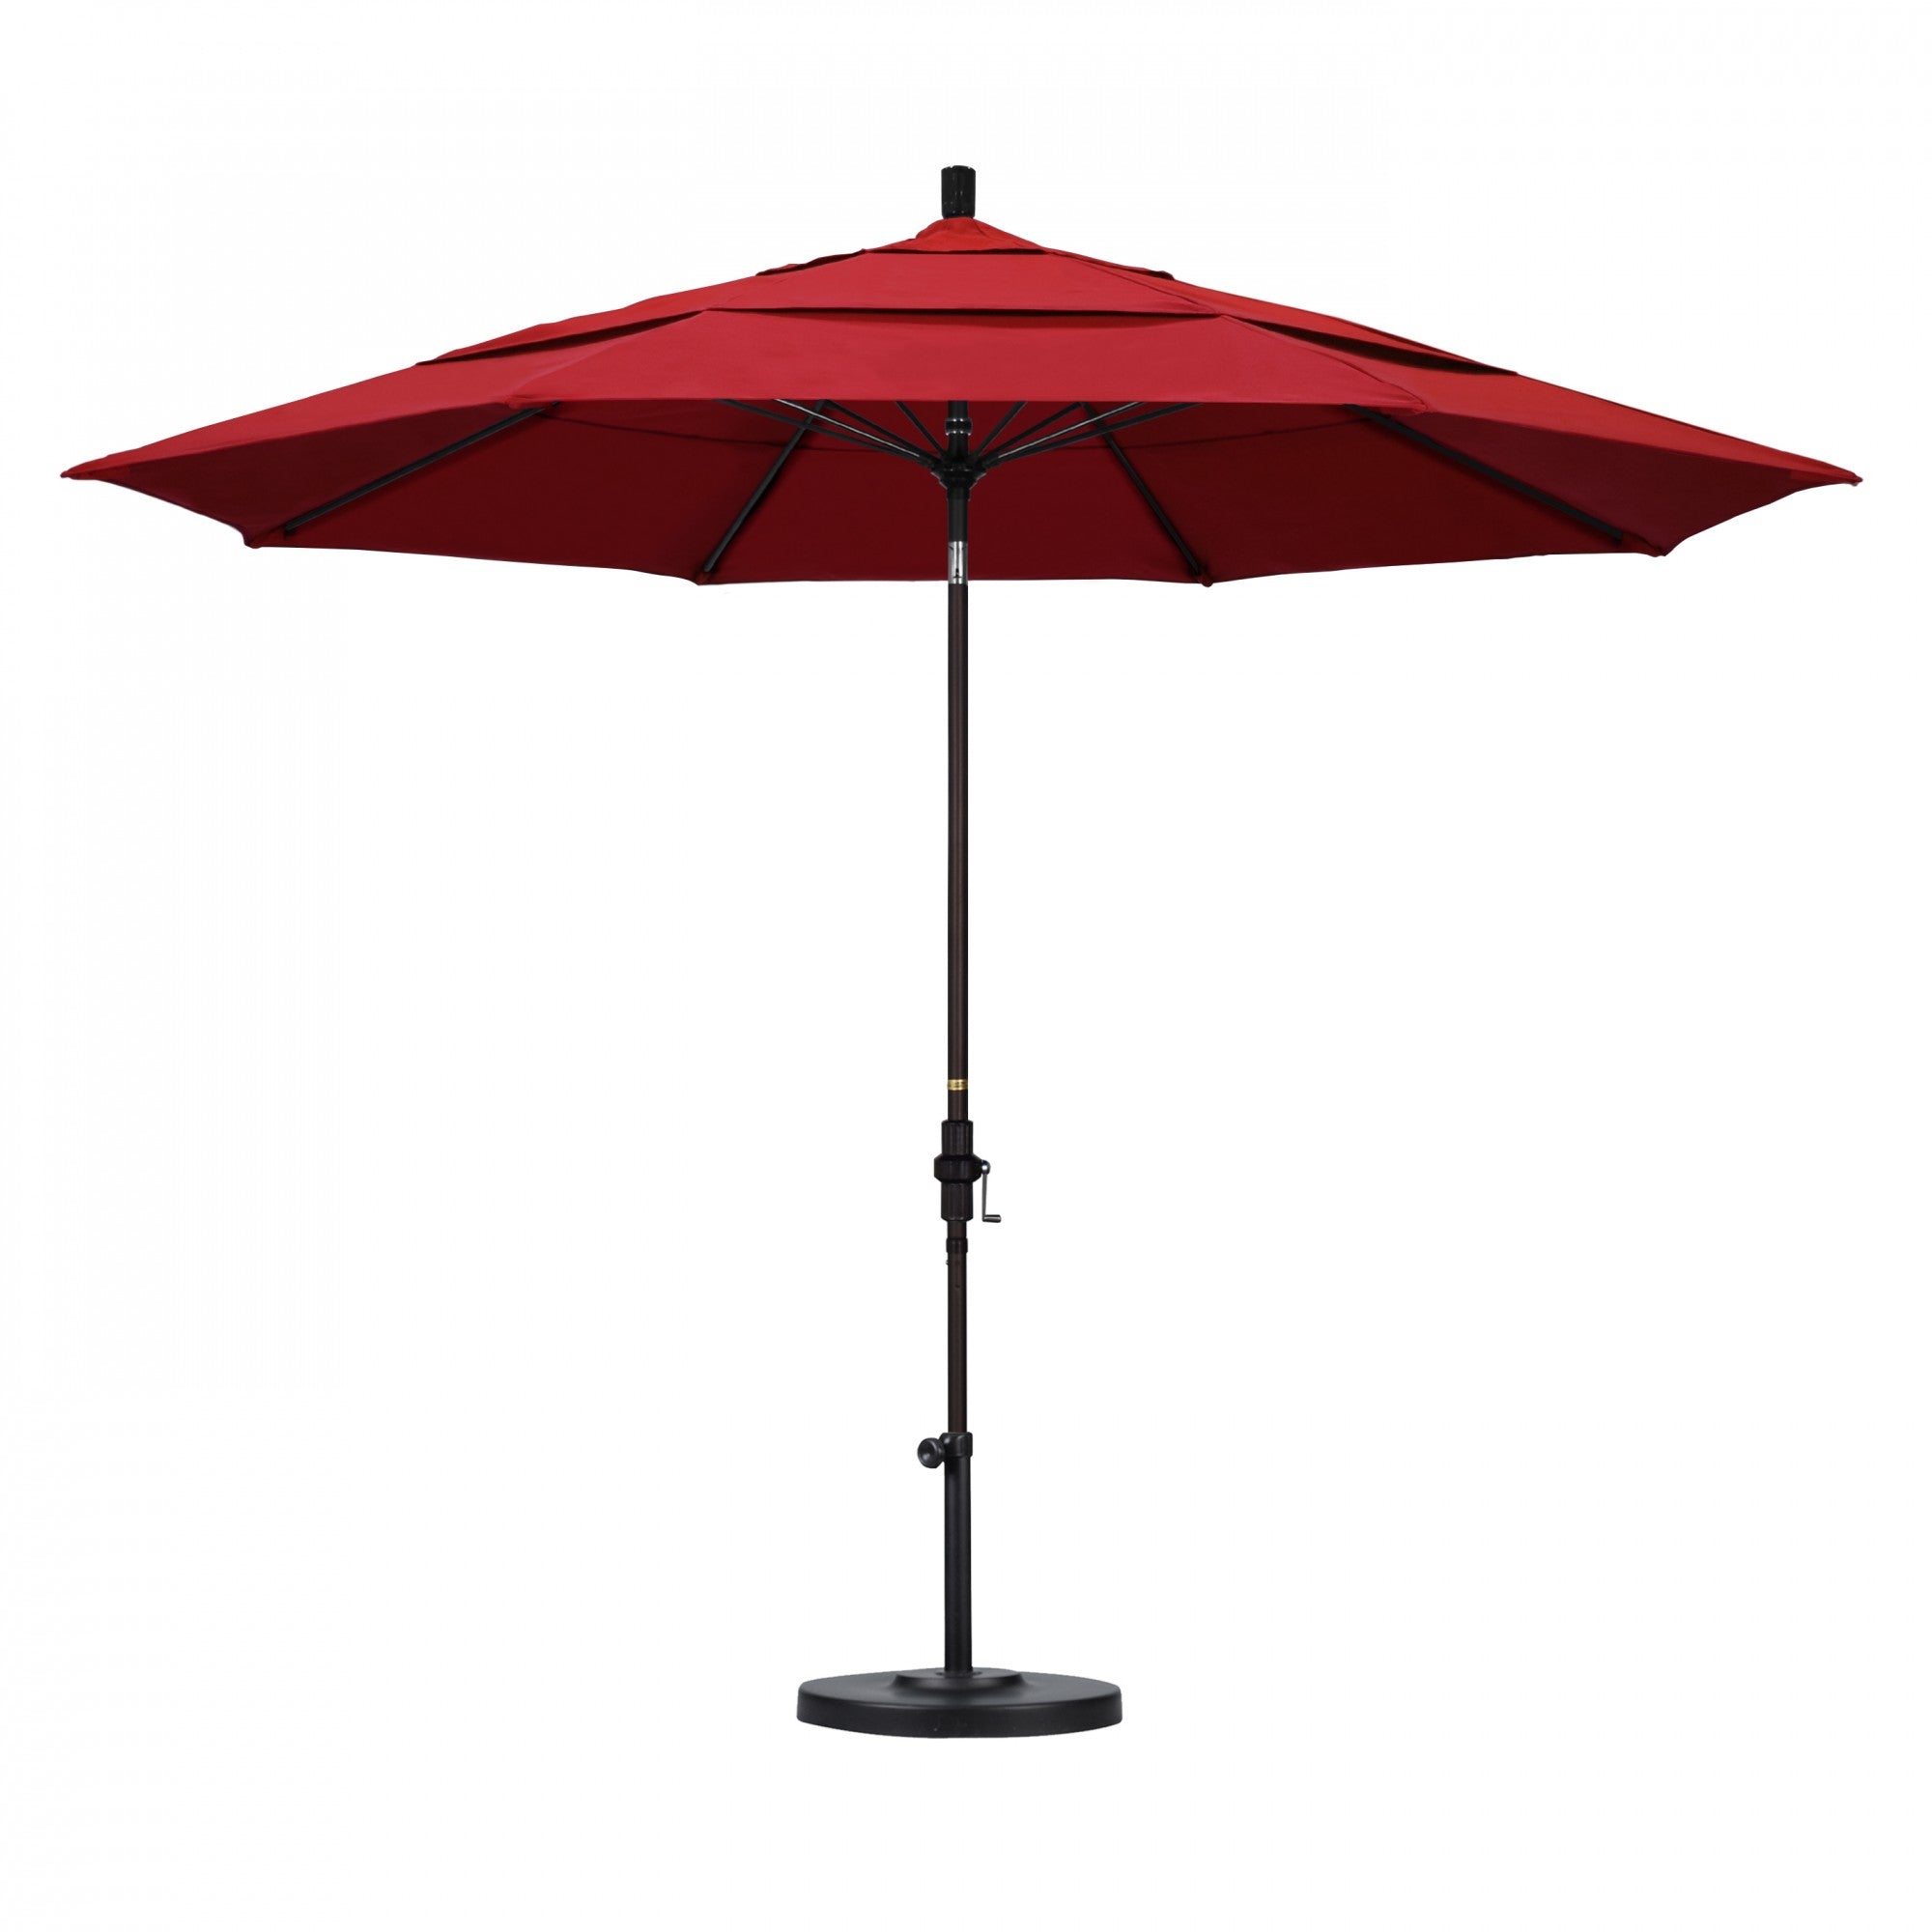 California Umbrella - 11' - Patio Umbrella Umbrella - Aluminum Pole - Red - Pacifica - GSCUF118117-SA03-DWV